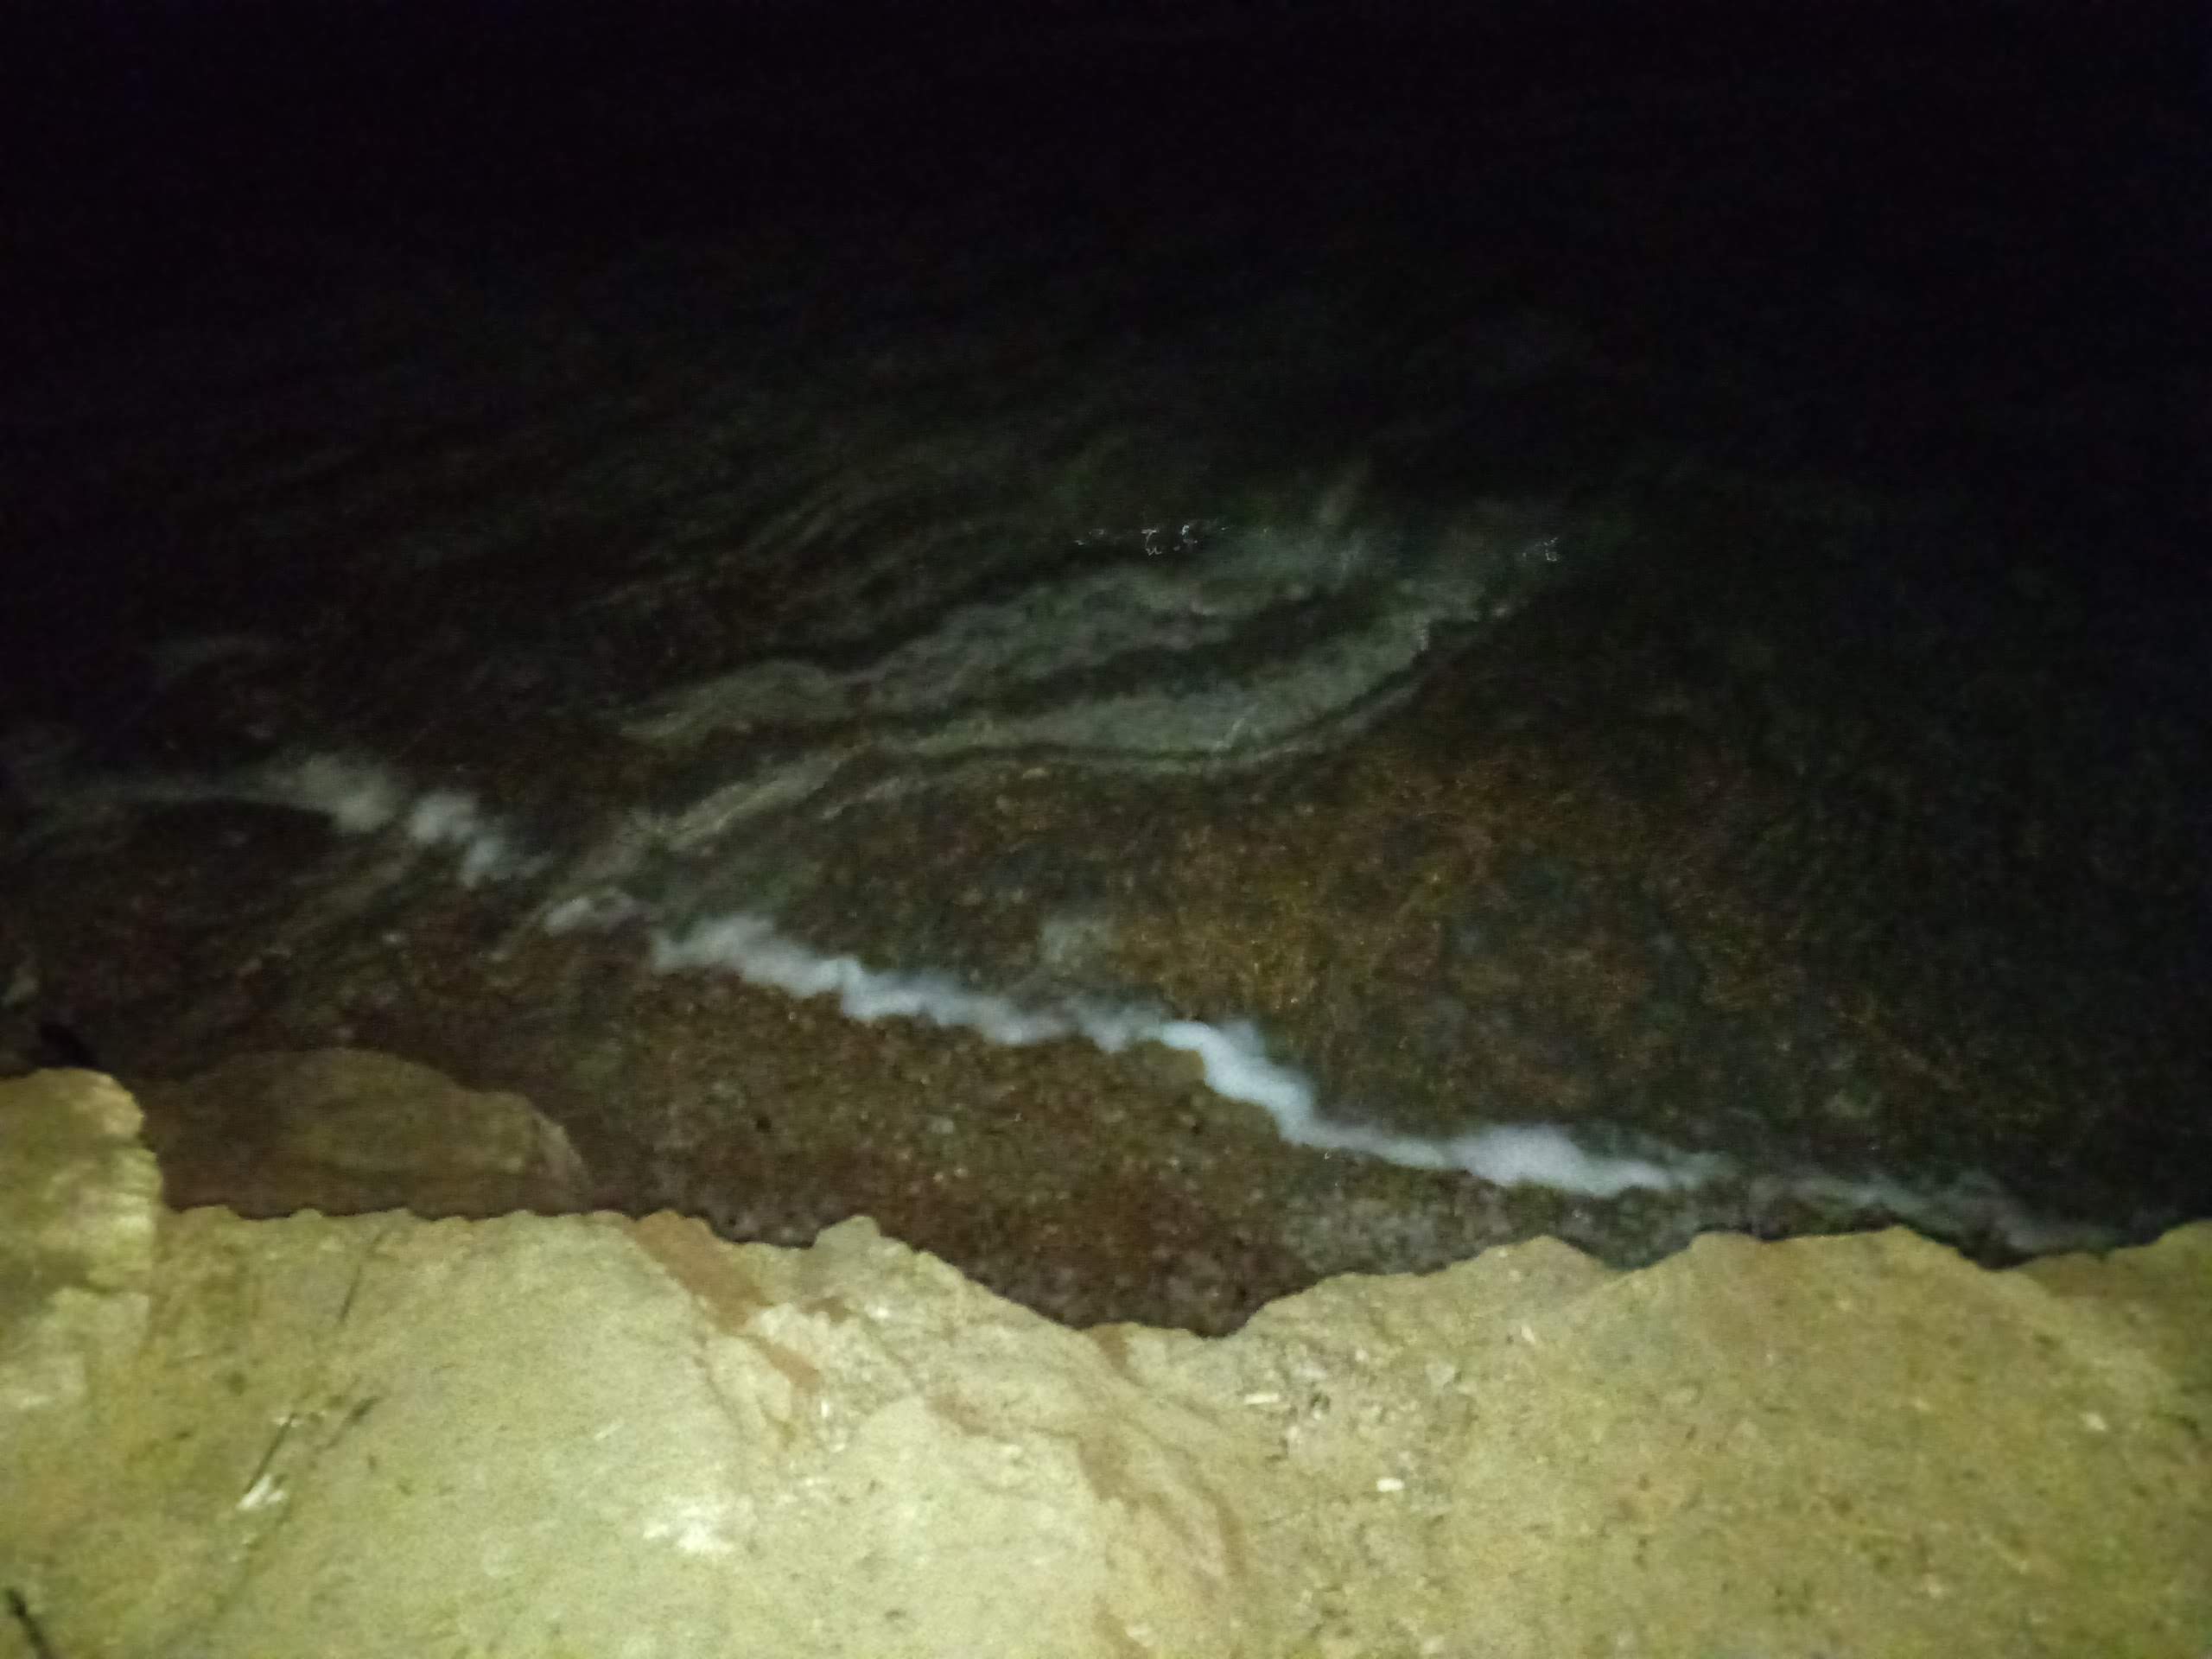 Dead Sea at night